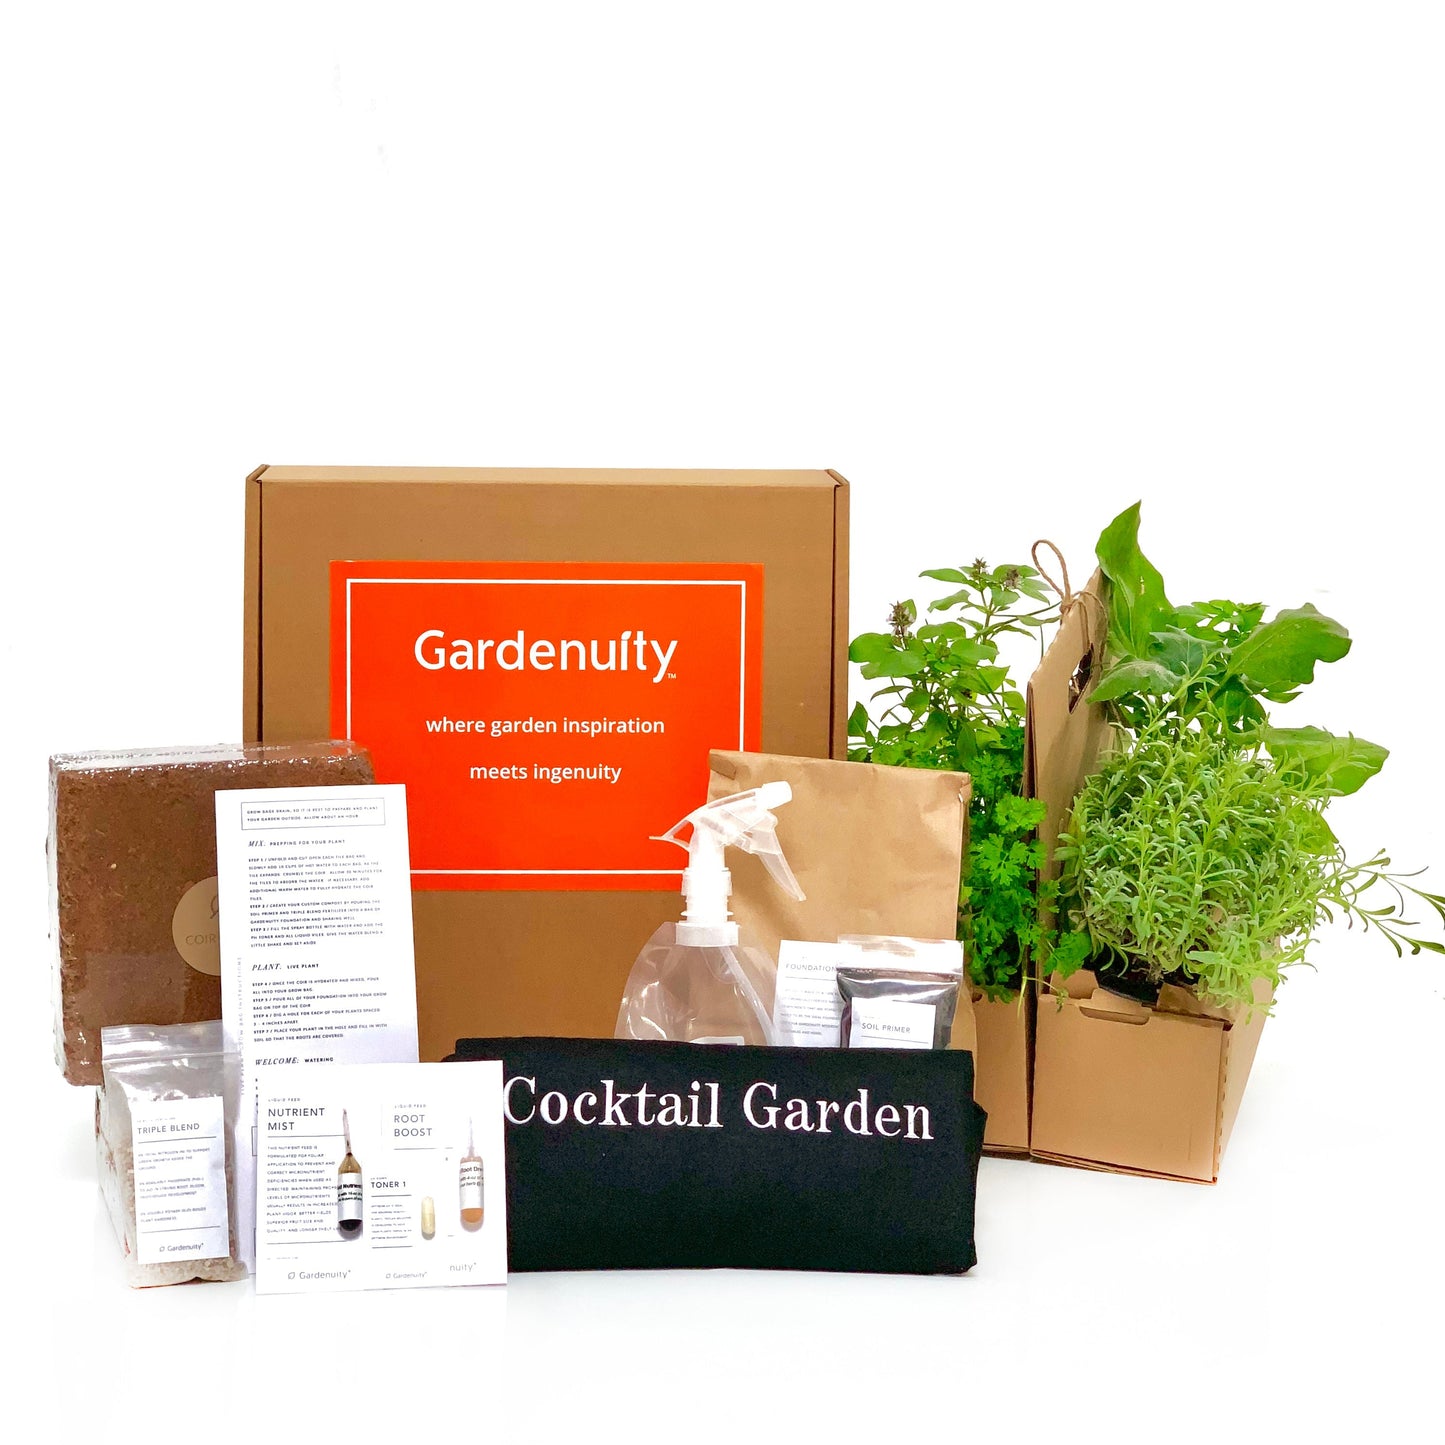 Cocktail Garden Gift Set‎ with 5 O'Clock Box